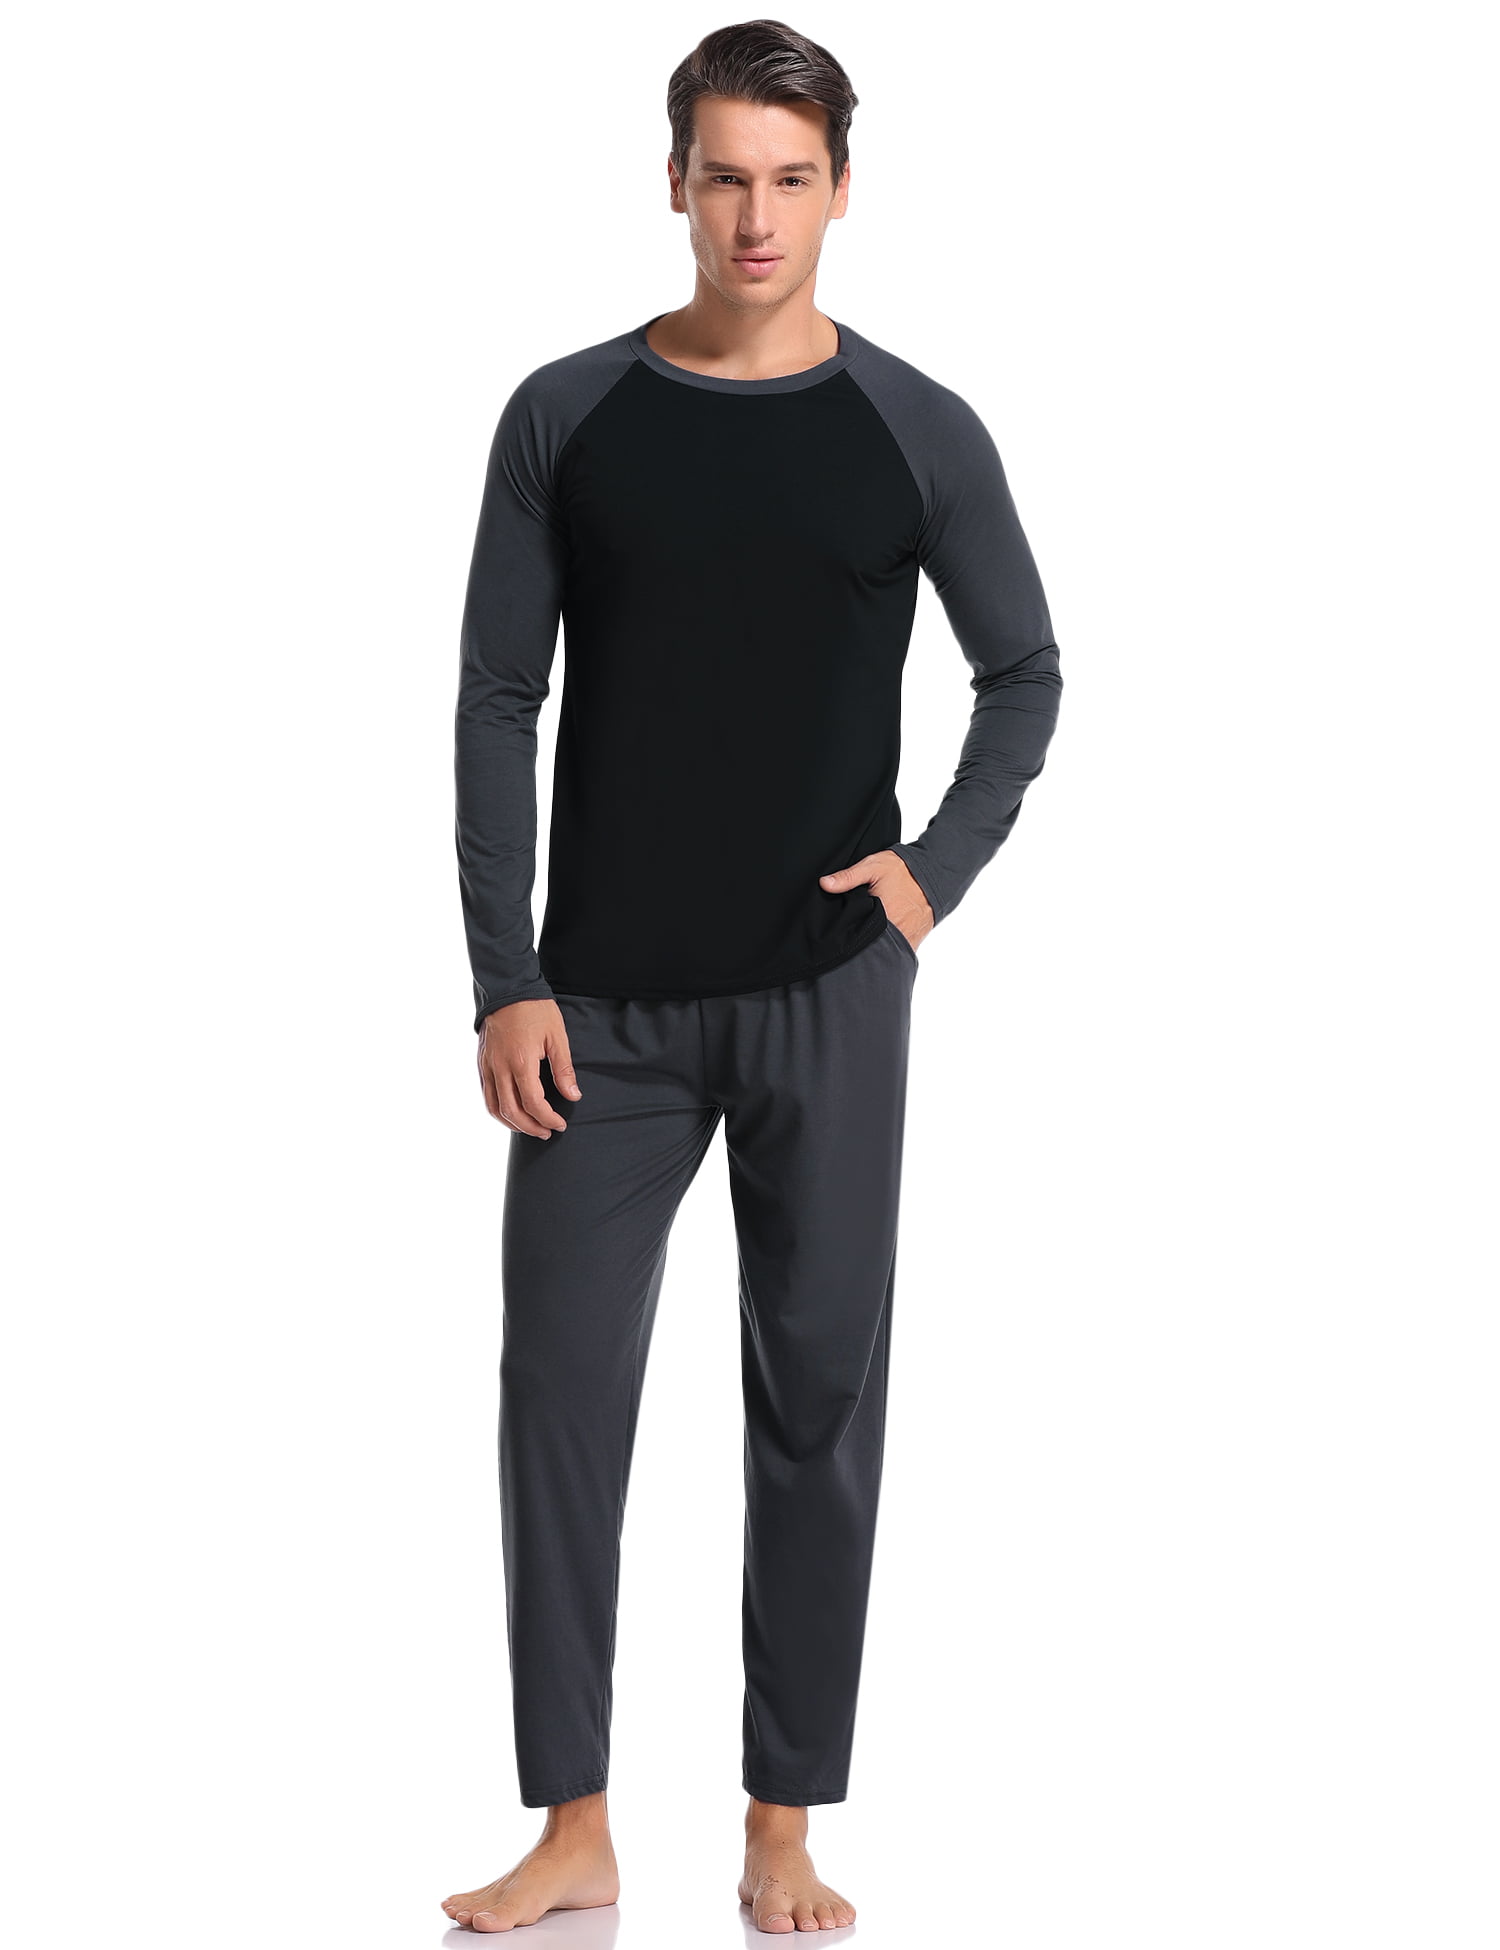 DAVID ARCHY Men's Cotton Sleepwear Long Raglan Sleeve Top and Bottom Pajama Set